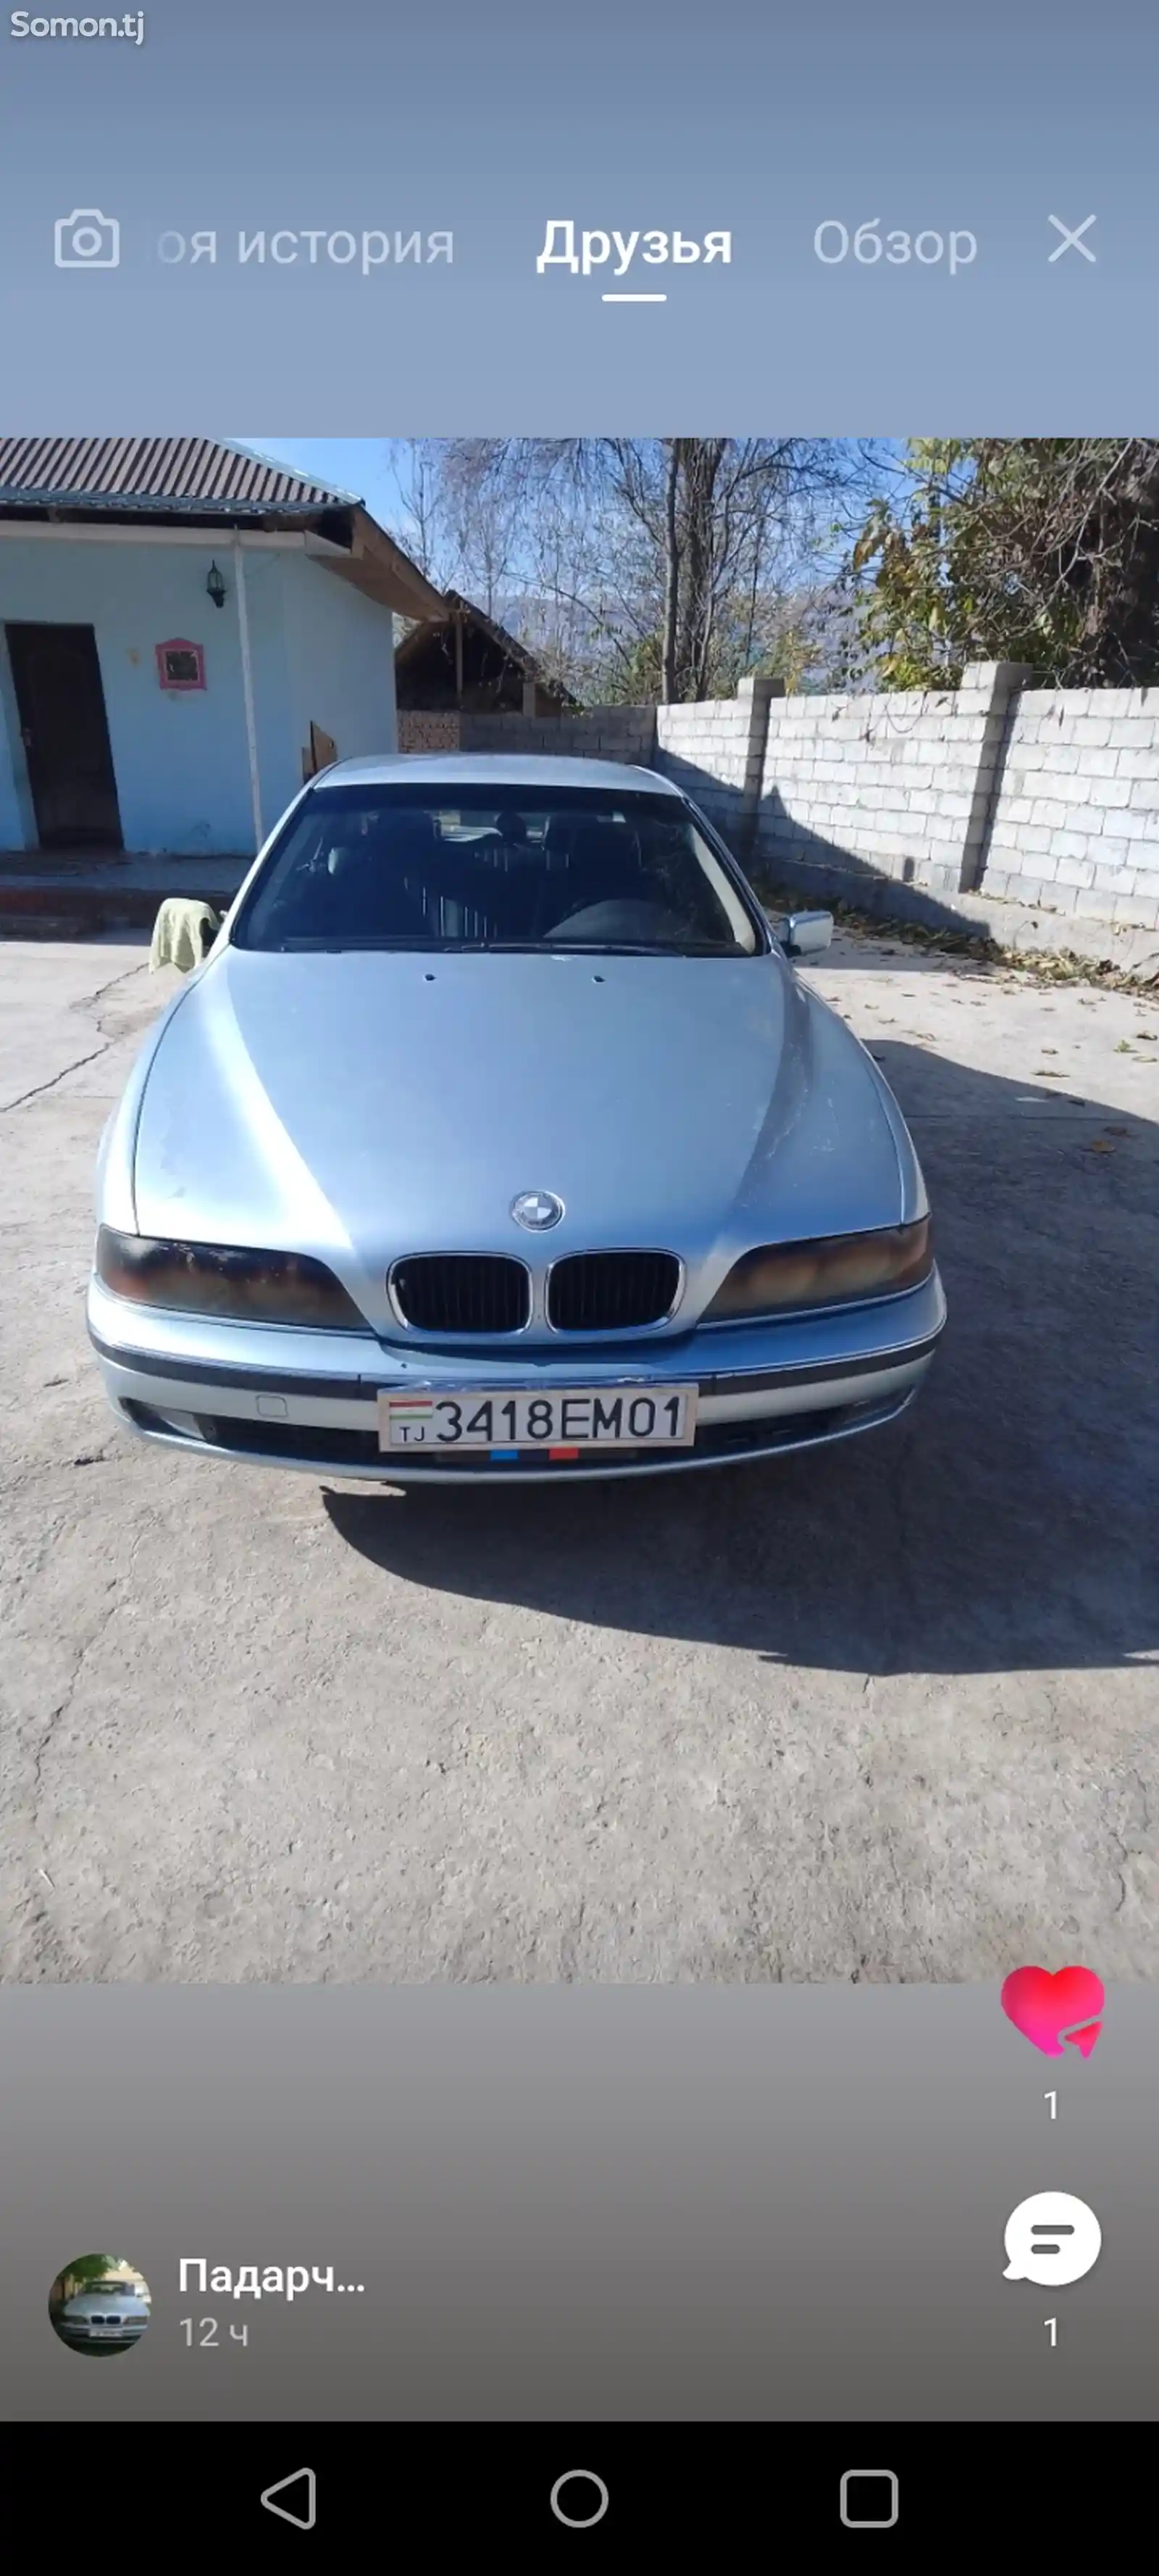 BMW 5 series, 2000